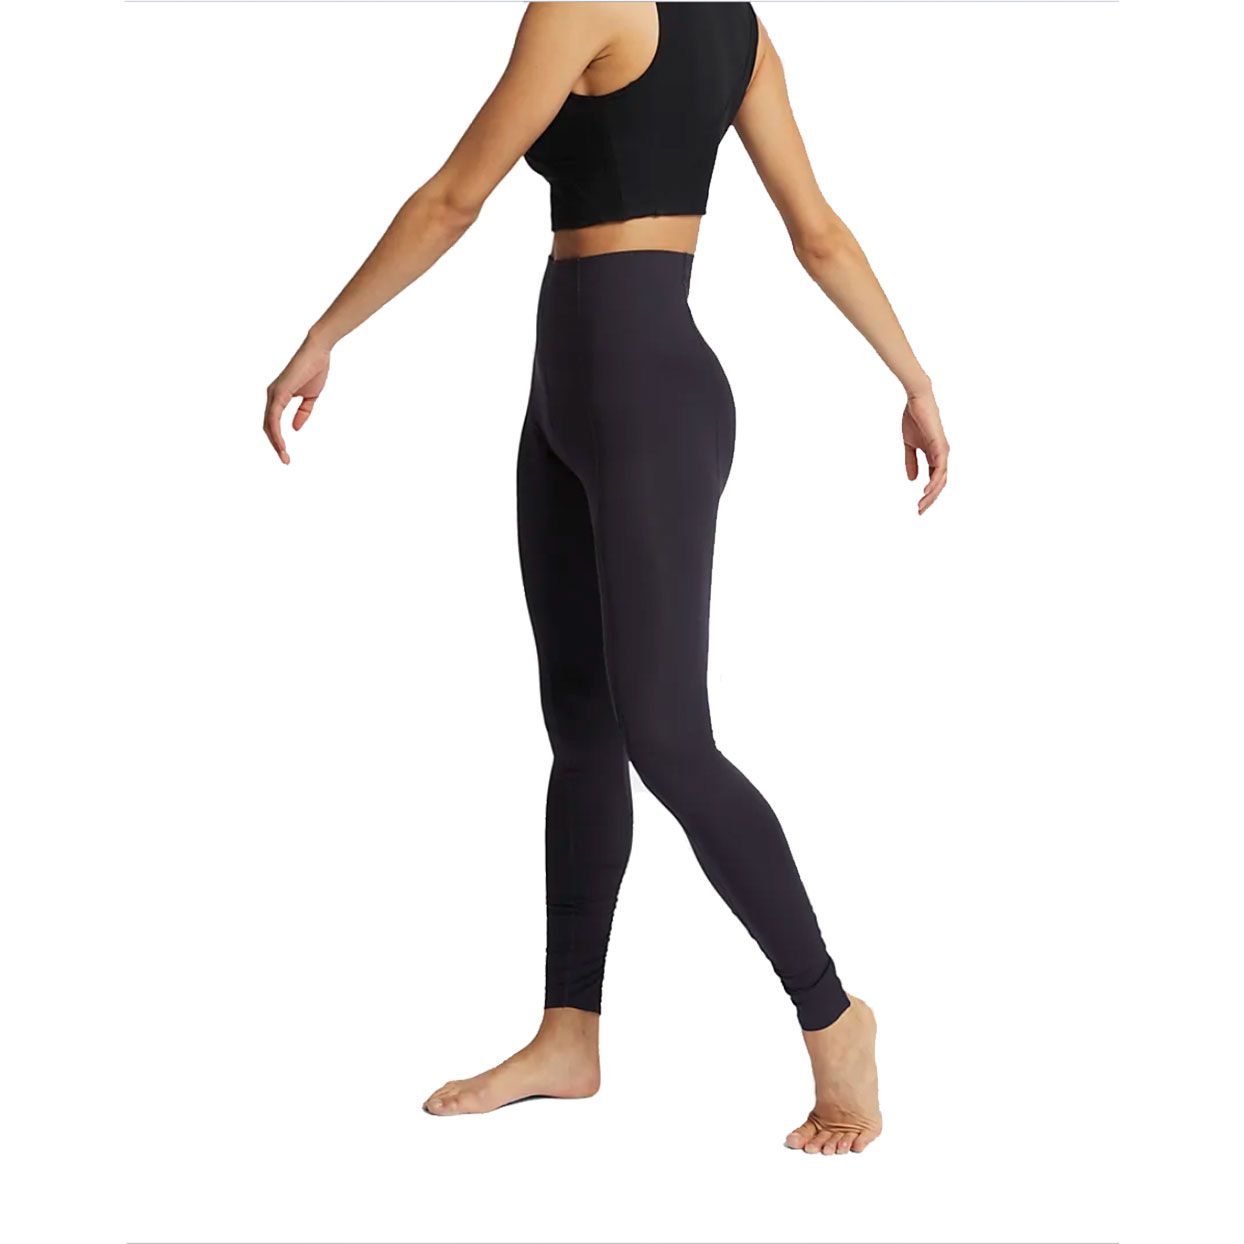 Printed Leggings for Women Black and White Paris Eiffel Tower Monuments 3/4 High Waist Yoga Pants Sport Gym Leggings Workout